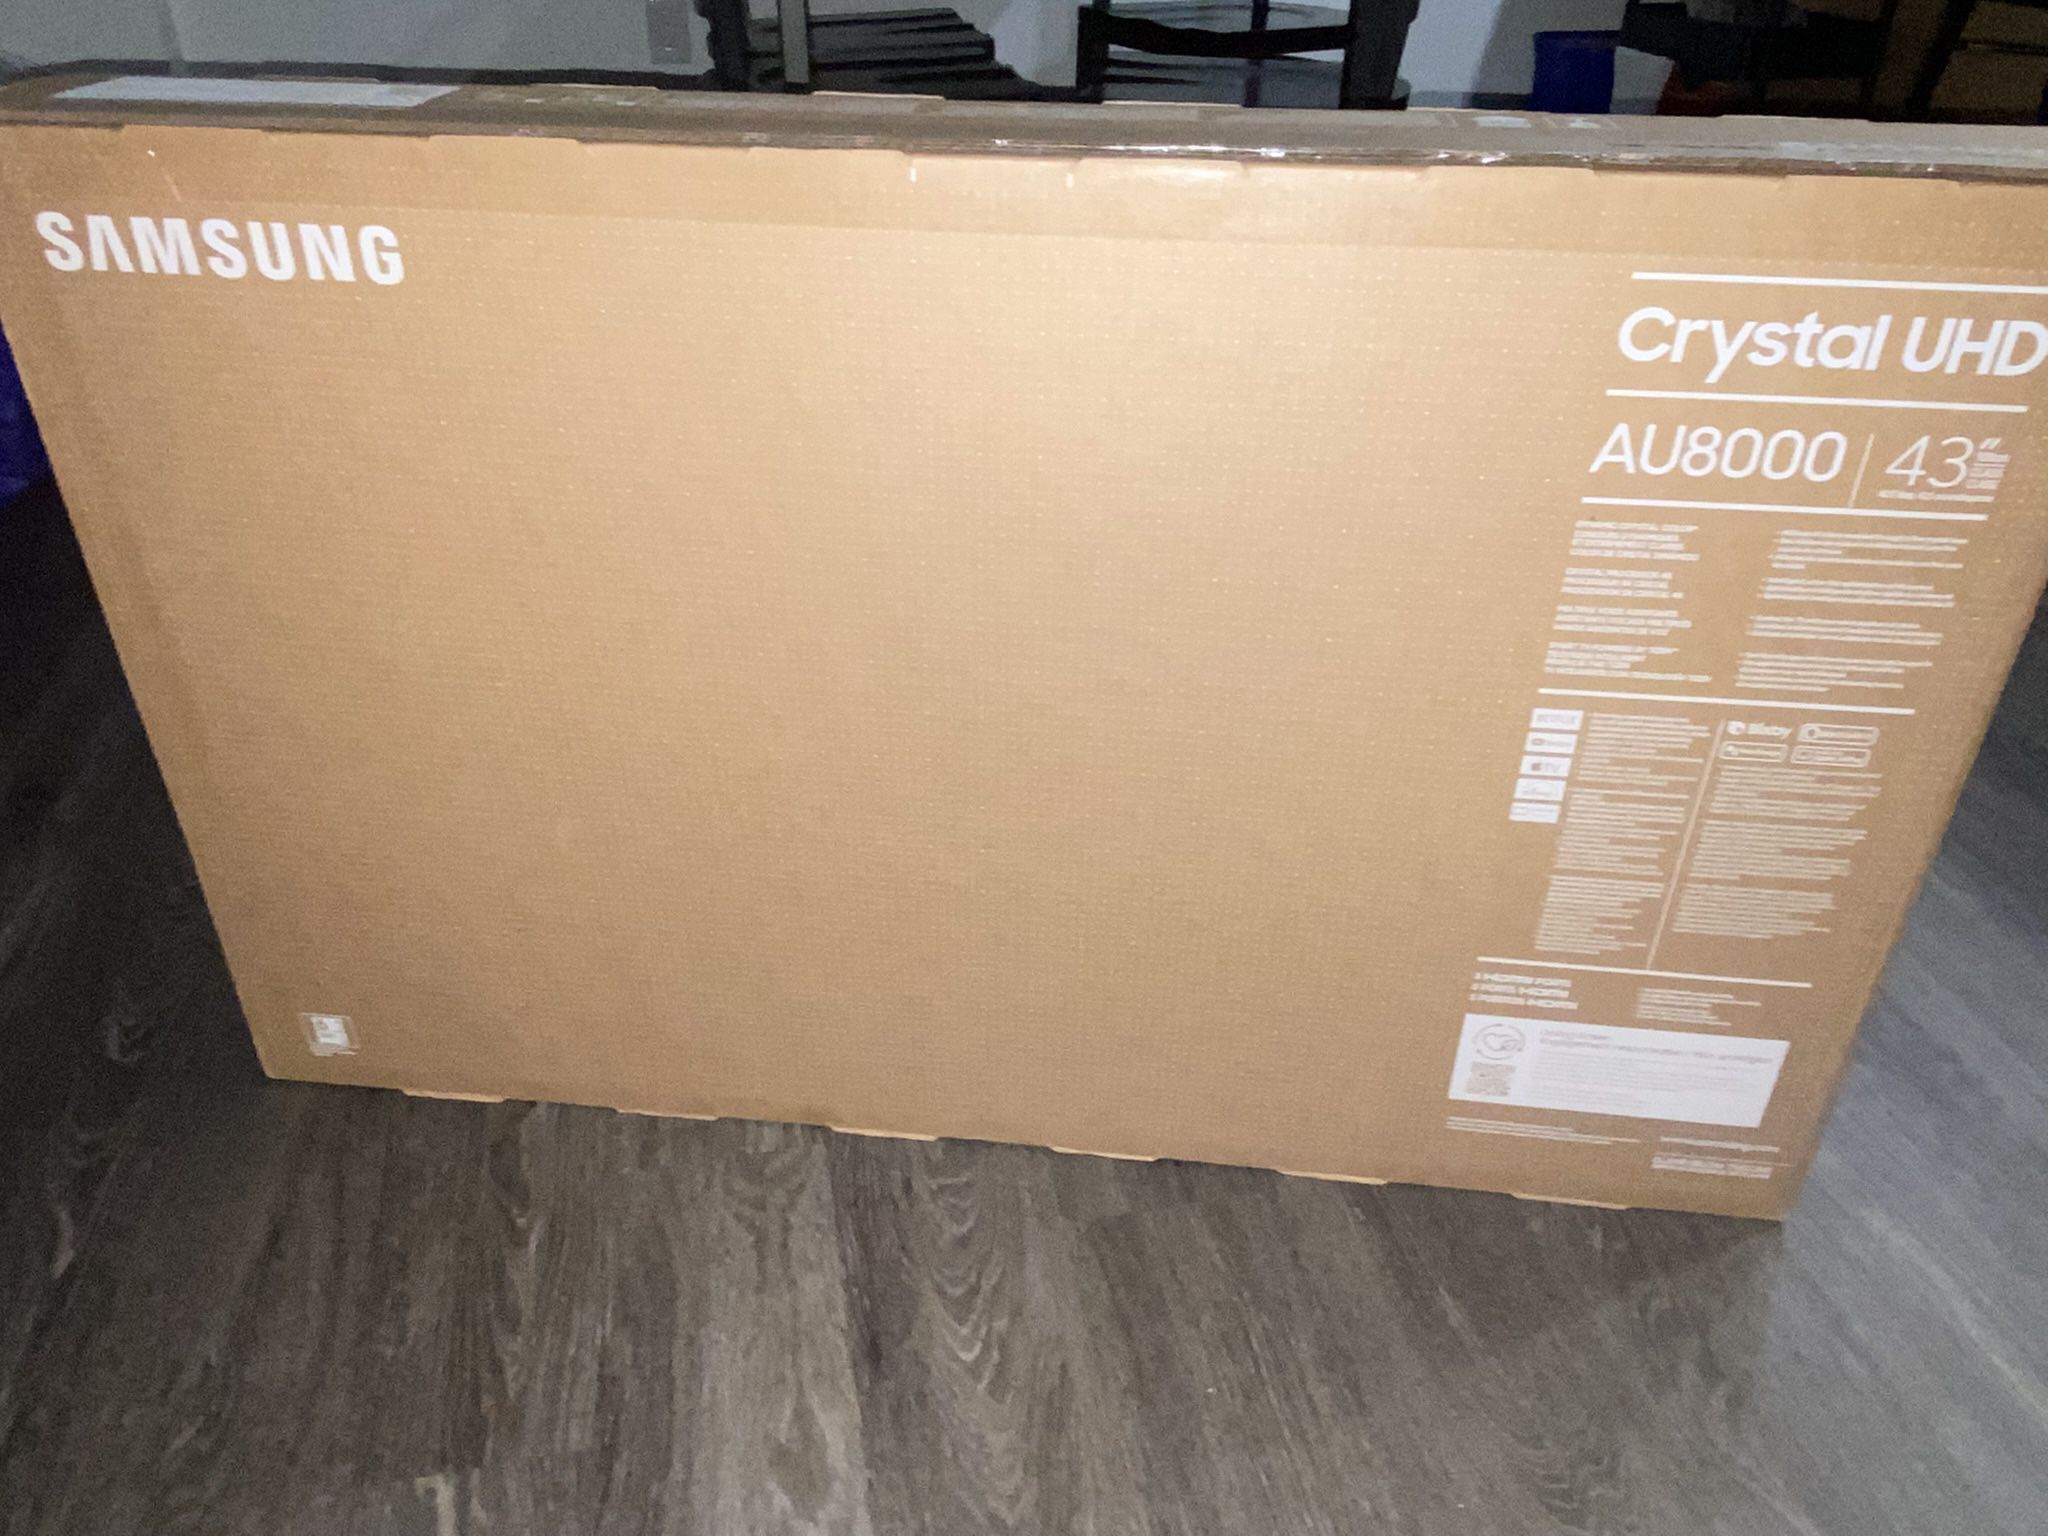 (NEVER UNBOXED) 43” SAMSUNG AU8000 Crystal UHD SMART TV